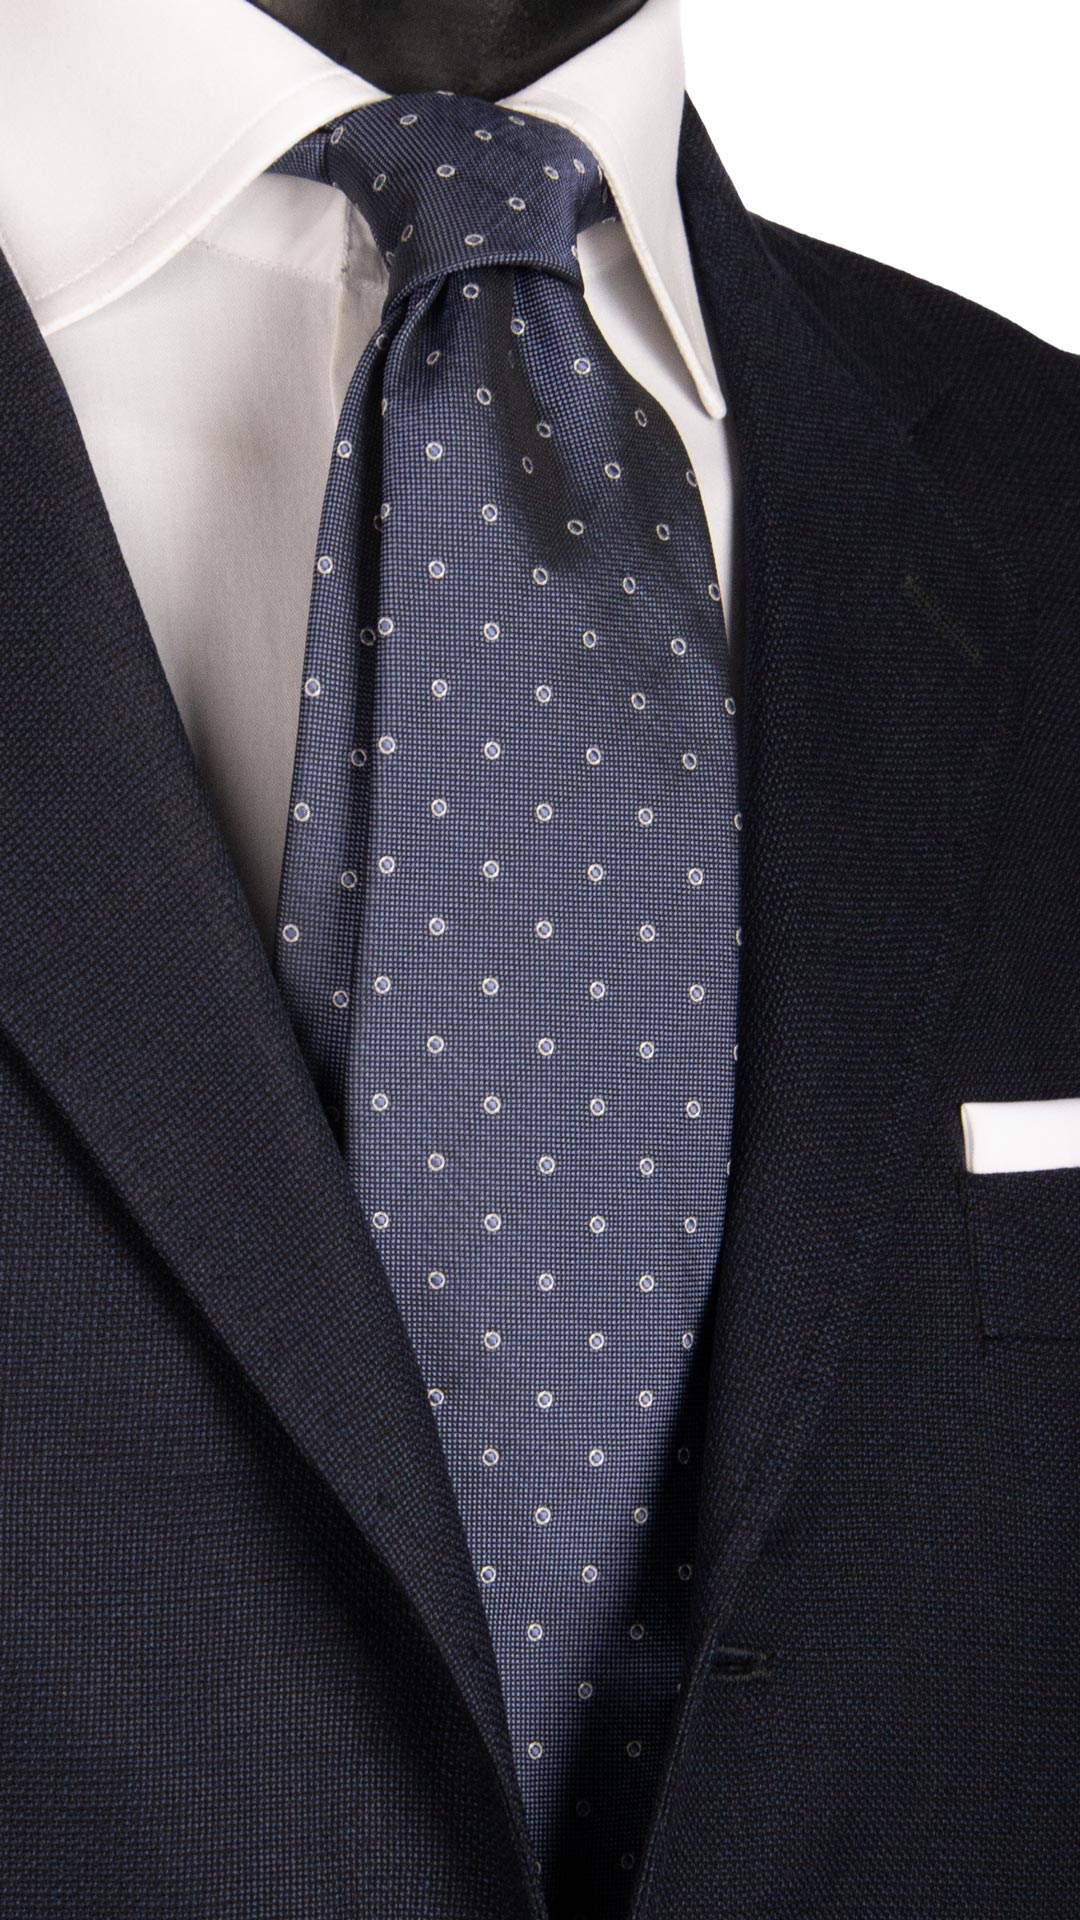 Cravatta da Cerimonia di Seta Blu Navy Fantasia Bianca CY6645 Made in Italy graffeo Cravatte